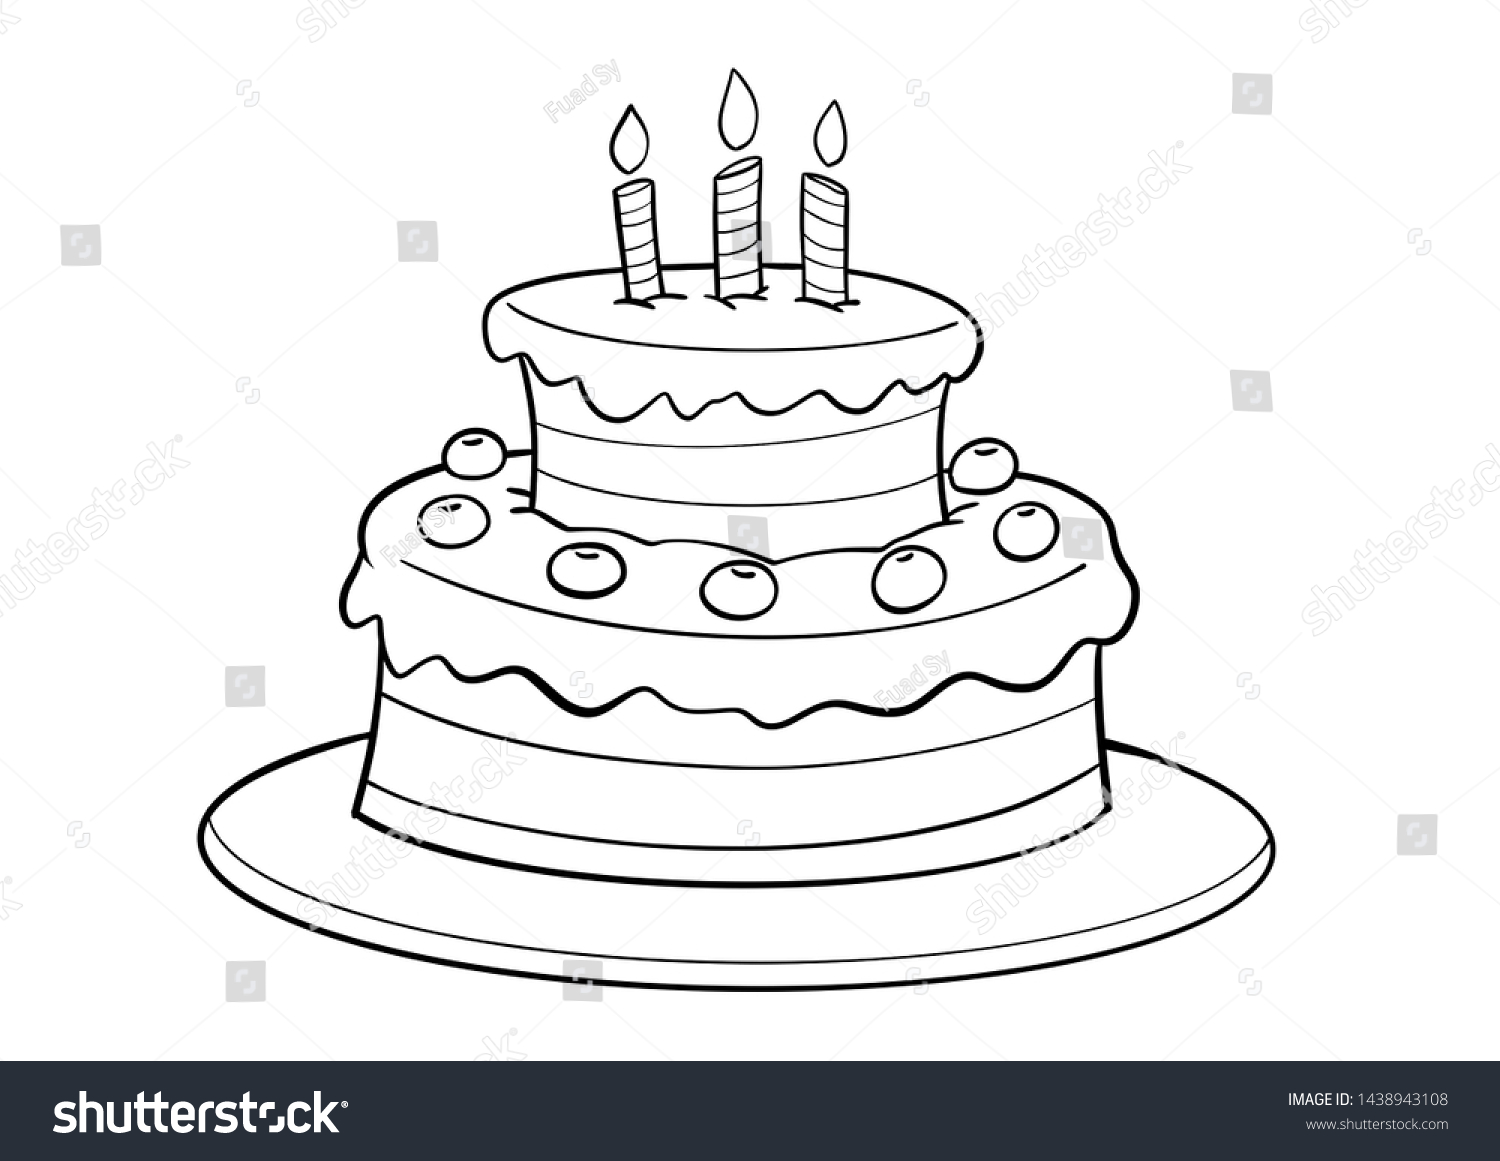 Birthday Cake Coloring Page Black White Stock Illustration 1438943108